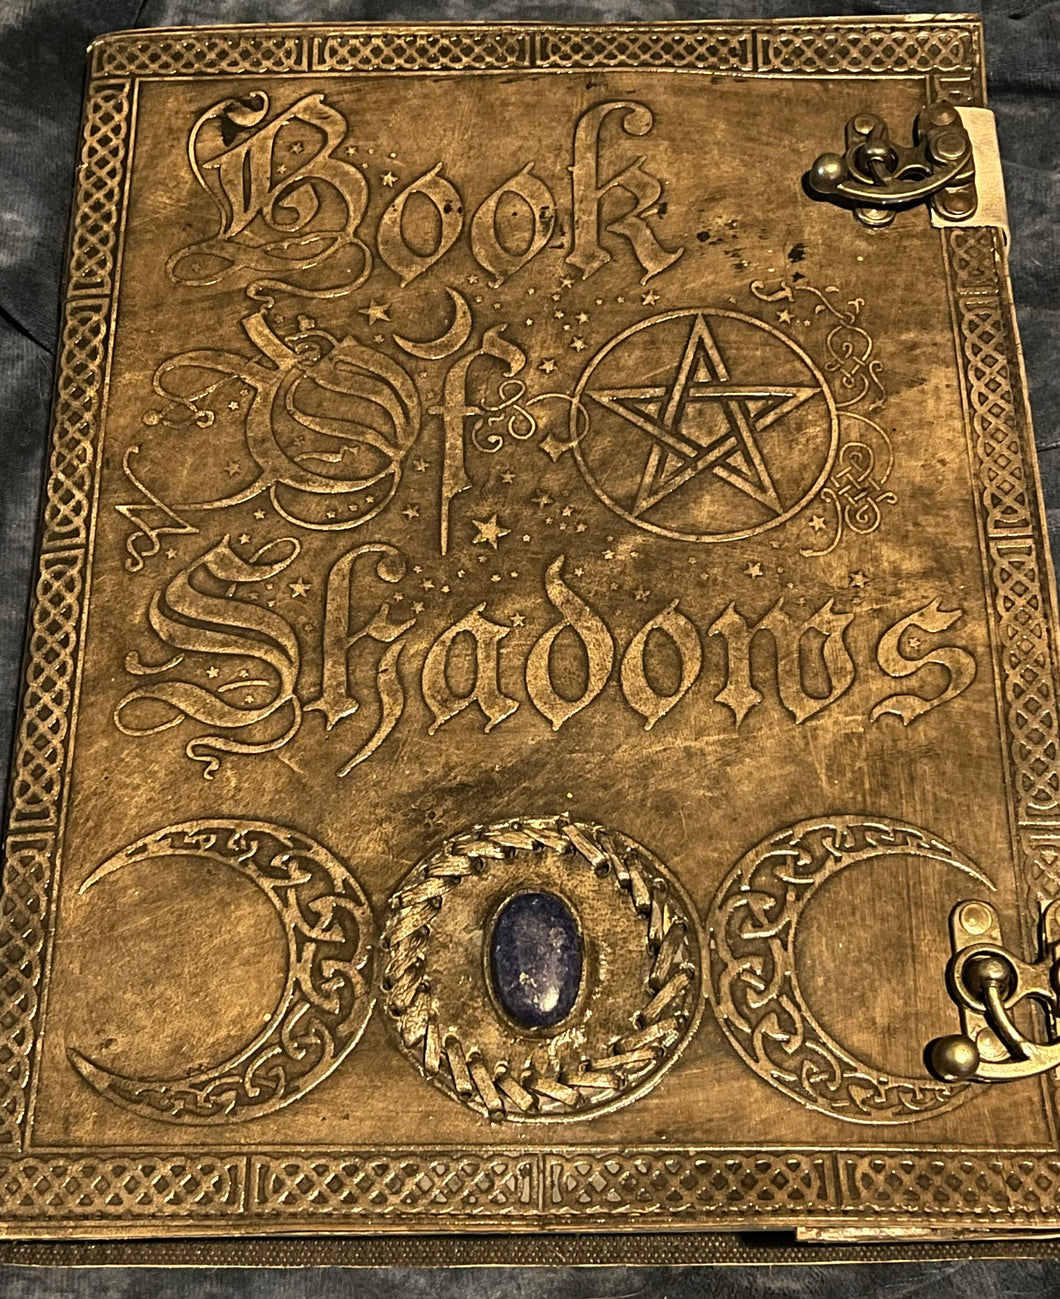 Book of Shadows, dual latch